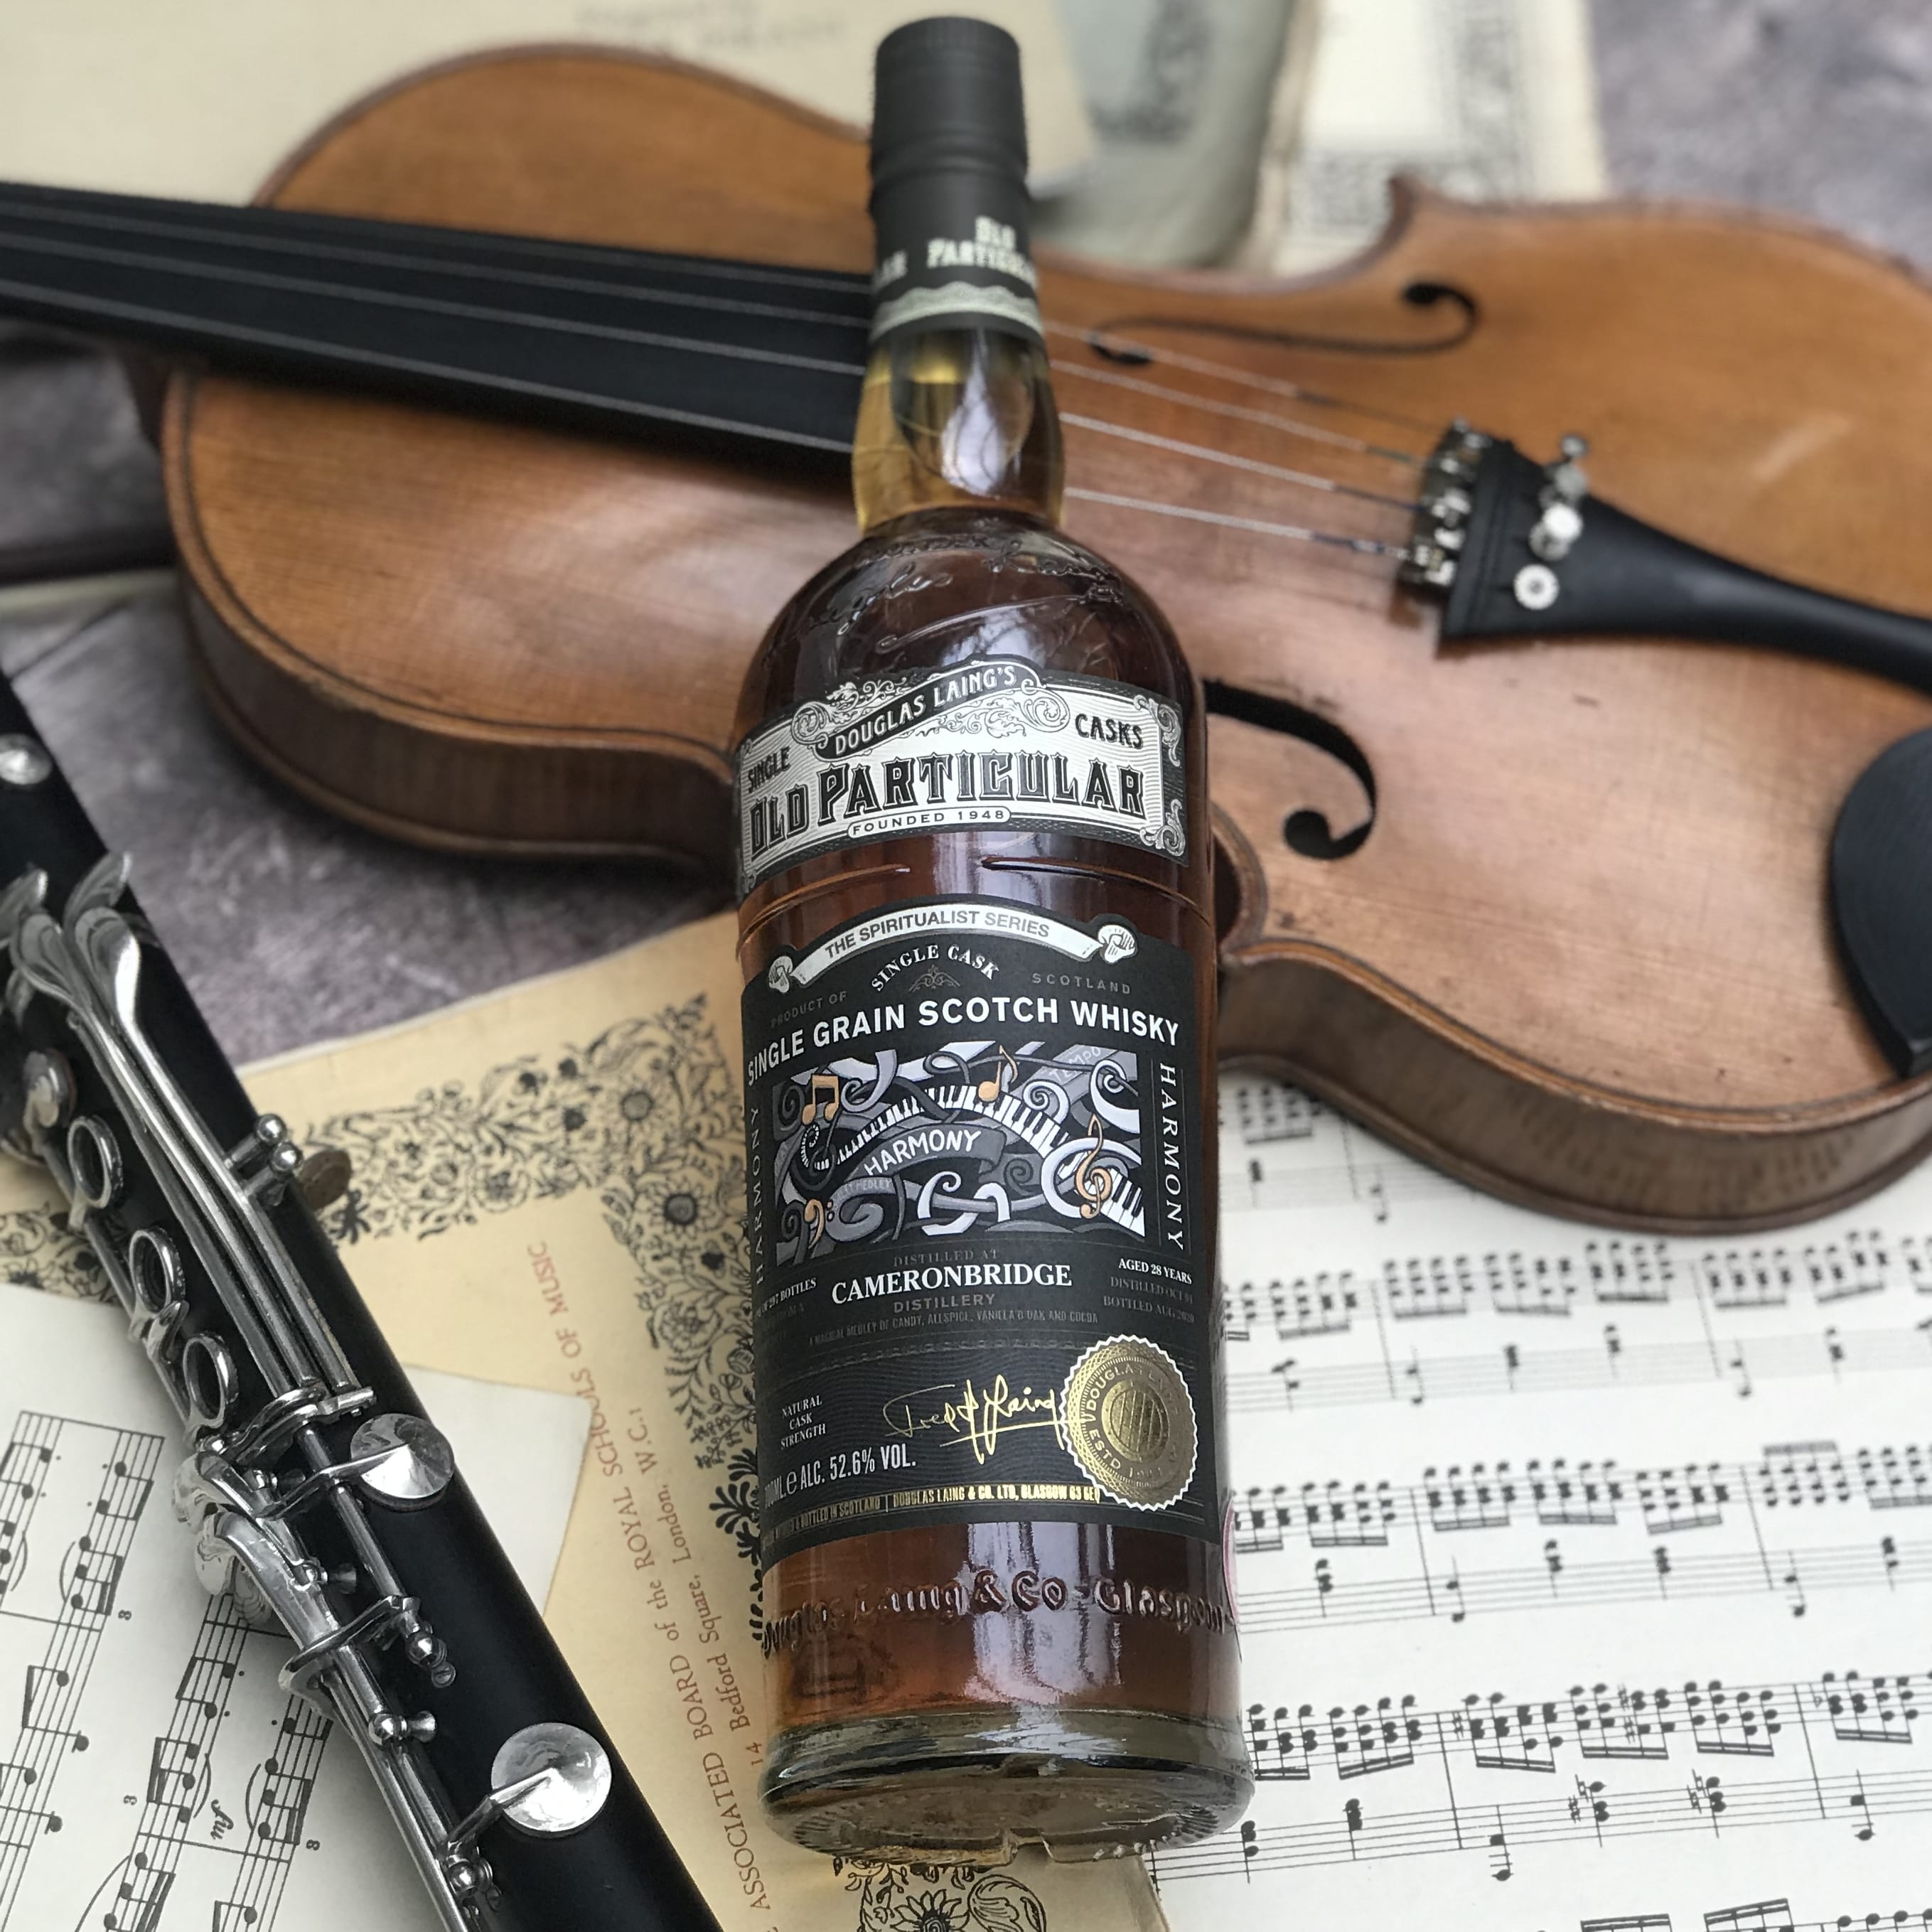 Douglas Laing Old Particular “Harmony" single grain scotch whisky